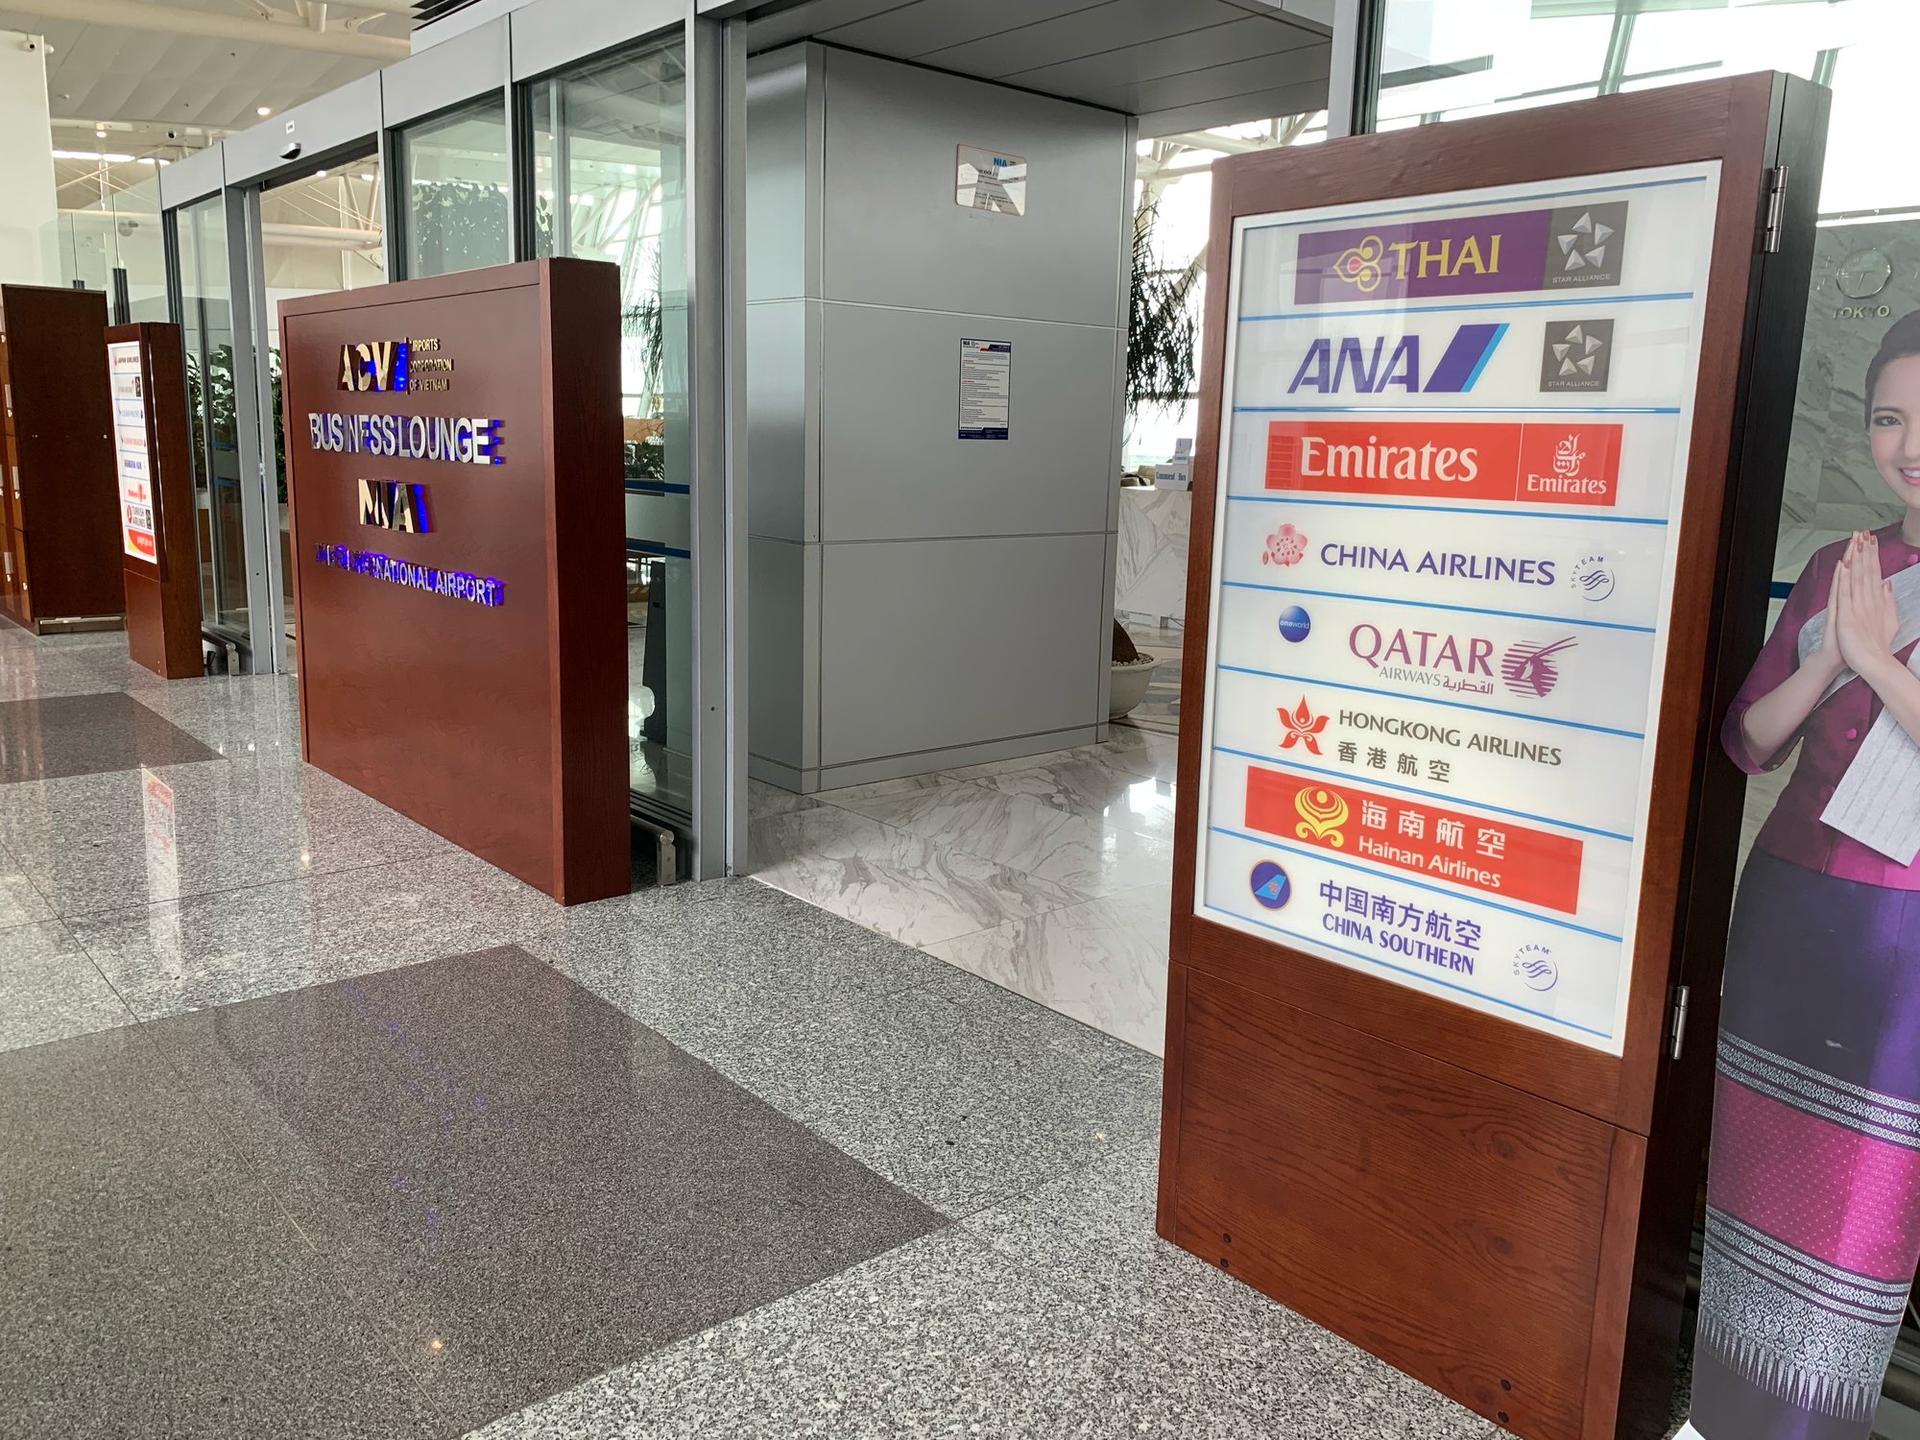 Noi Bai International Airport Business Lounge image 17 of 26